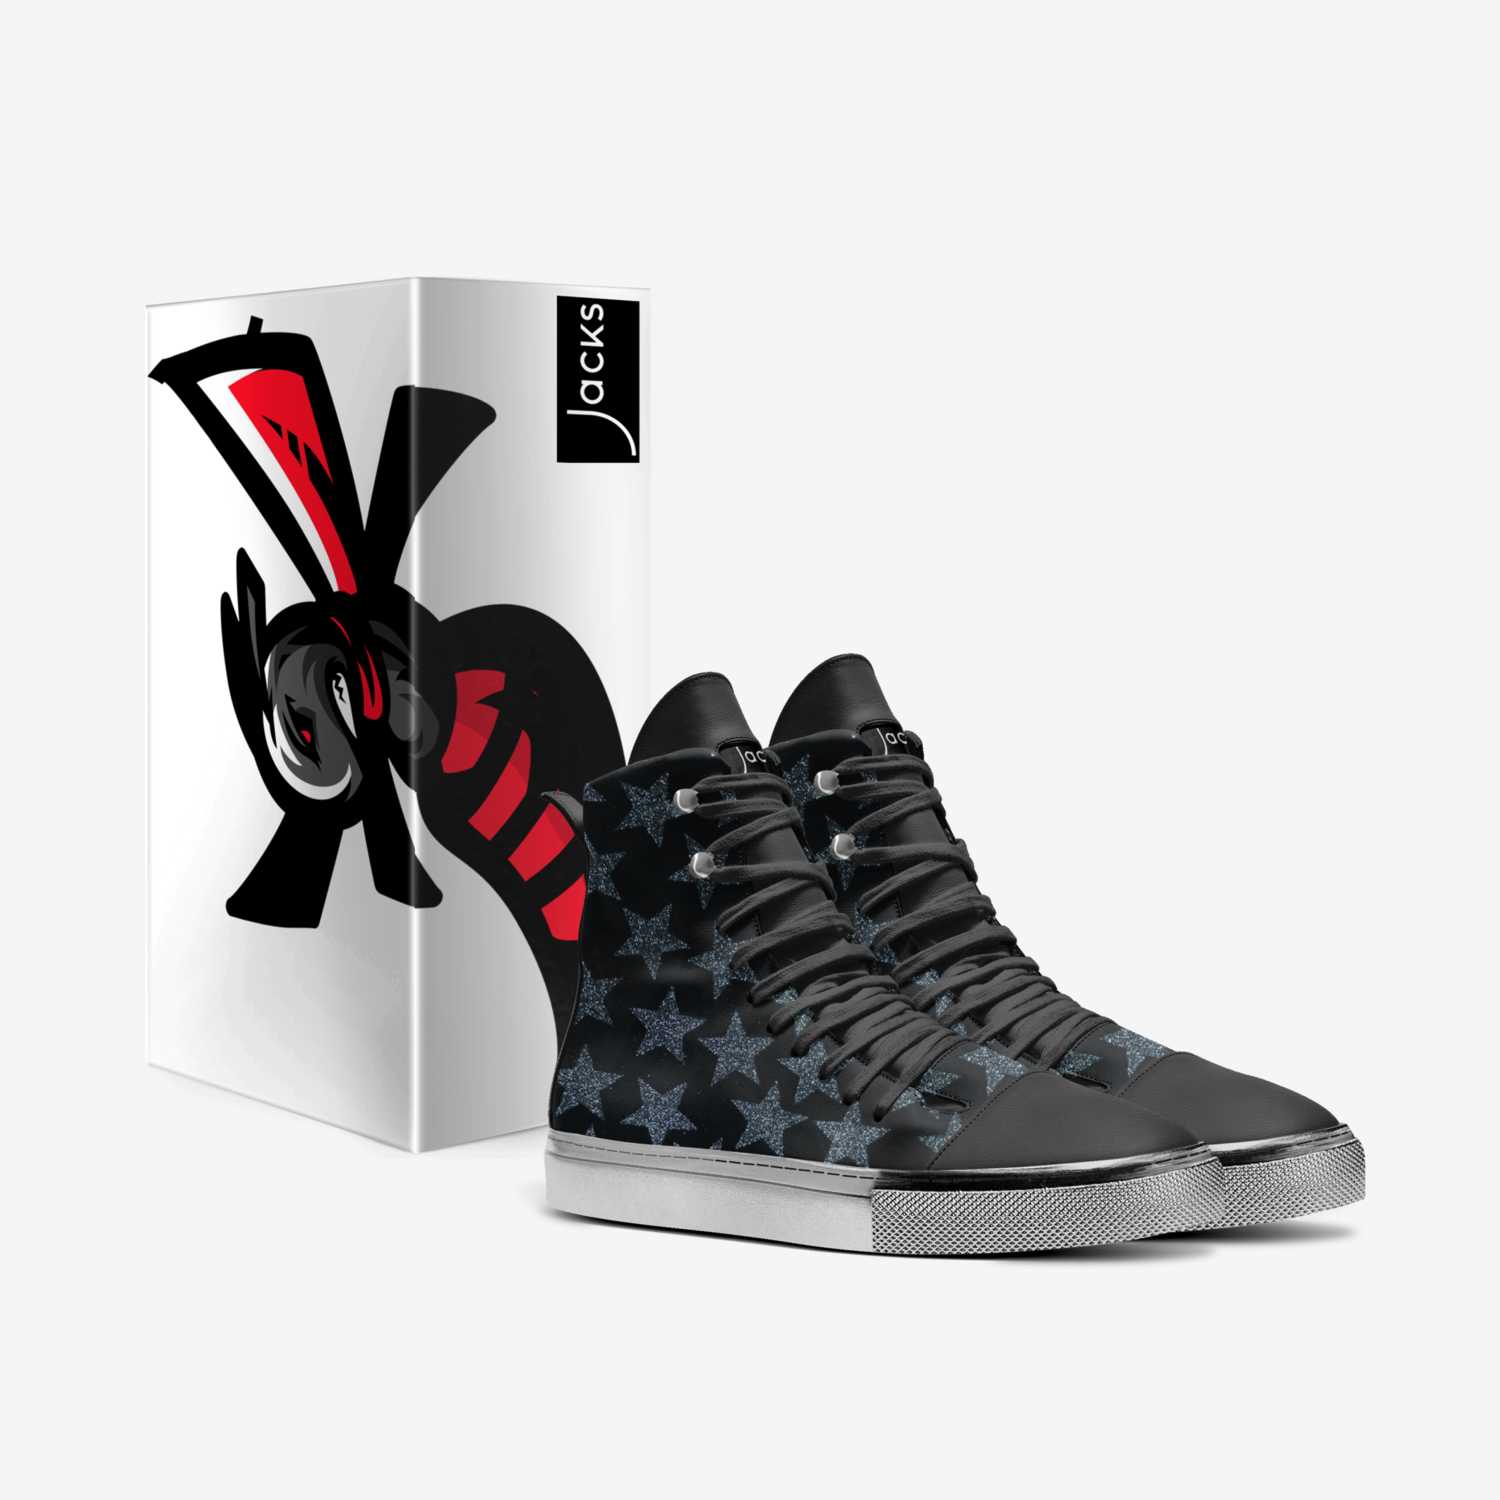 Big Top - Star  custom made in Italy shoes by Marvin Ricks Latoya Jackson | Box view